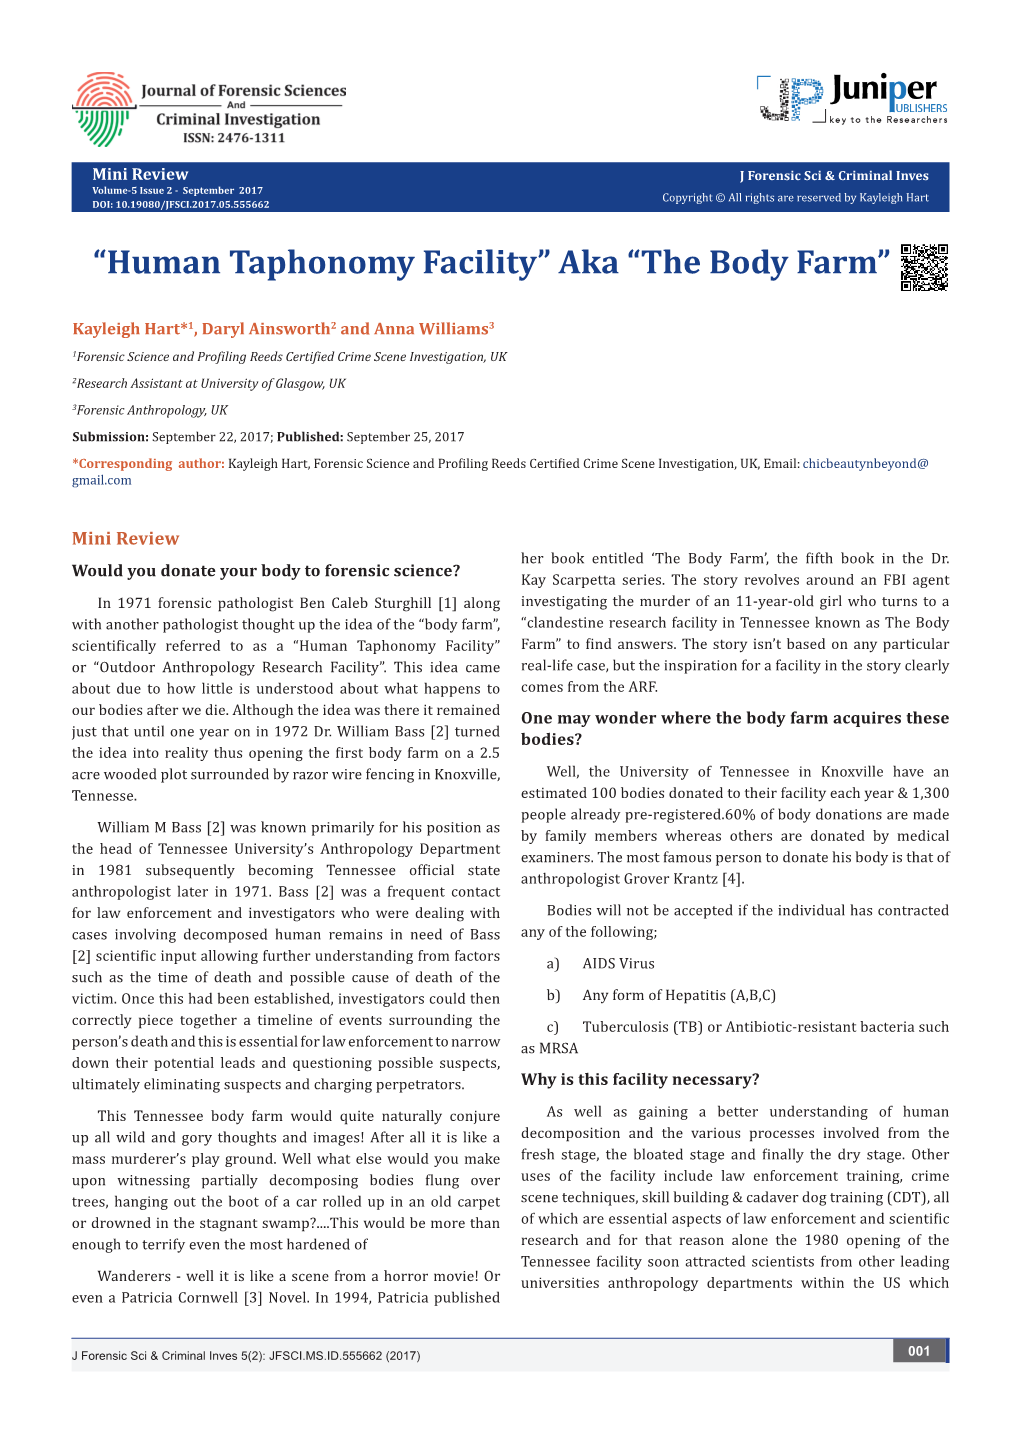 The Body Farm”